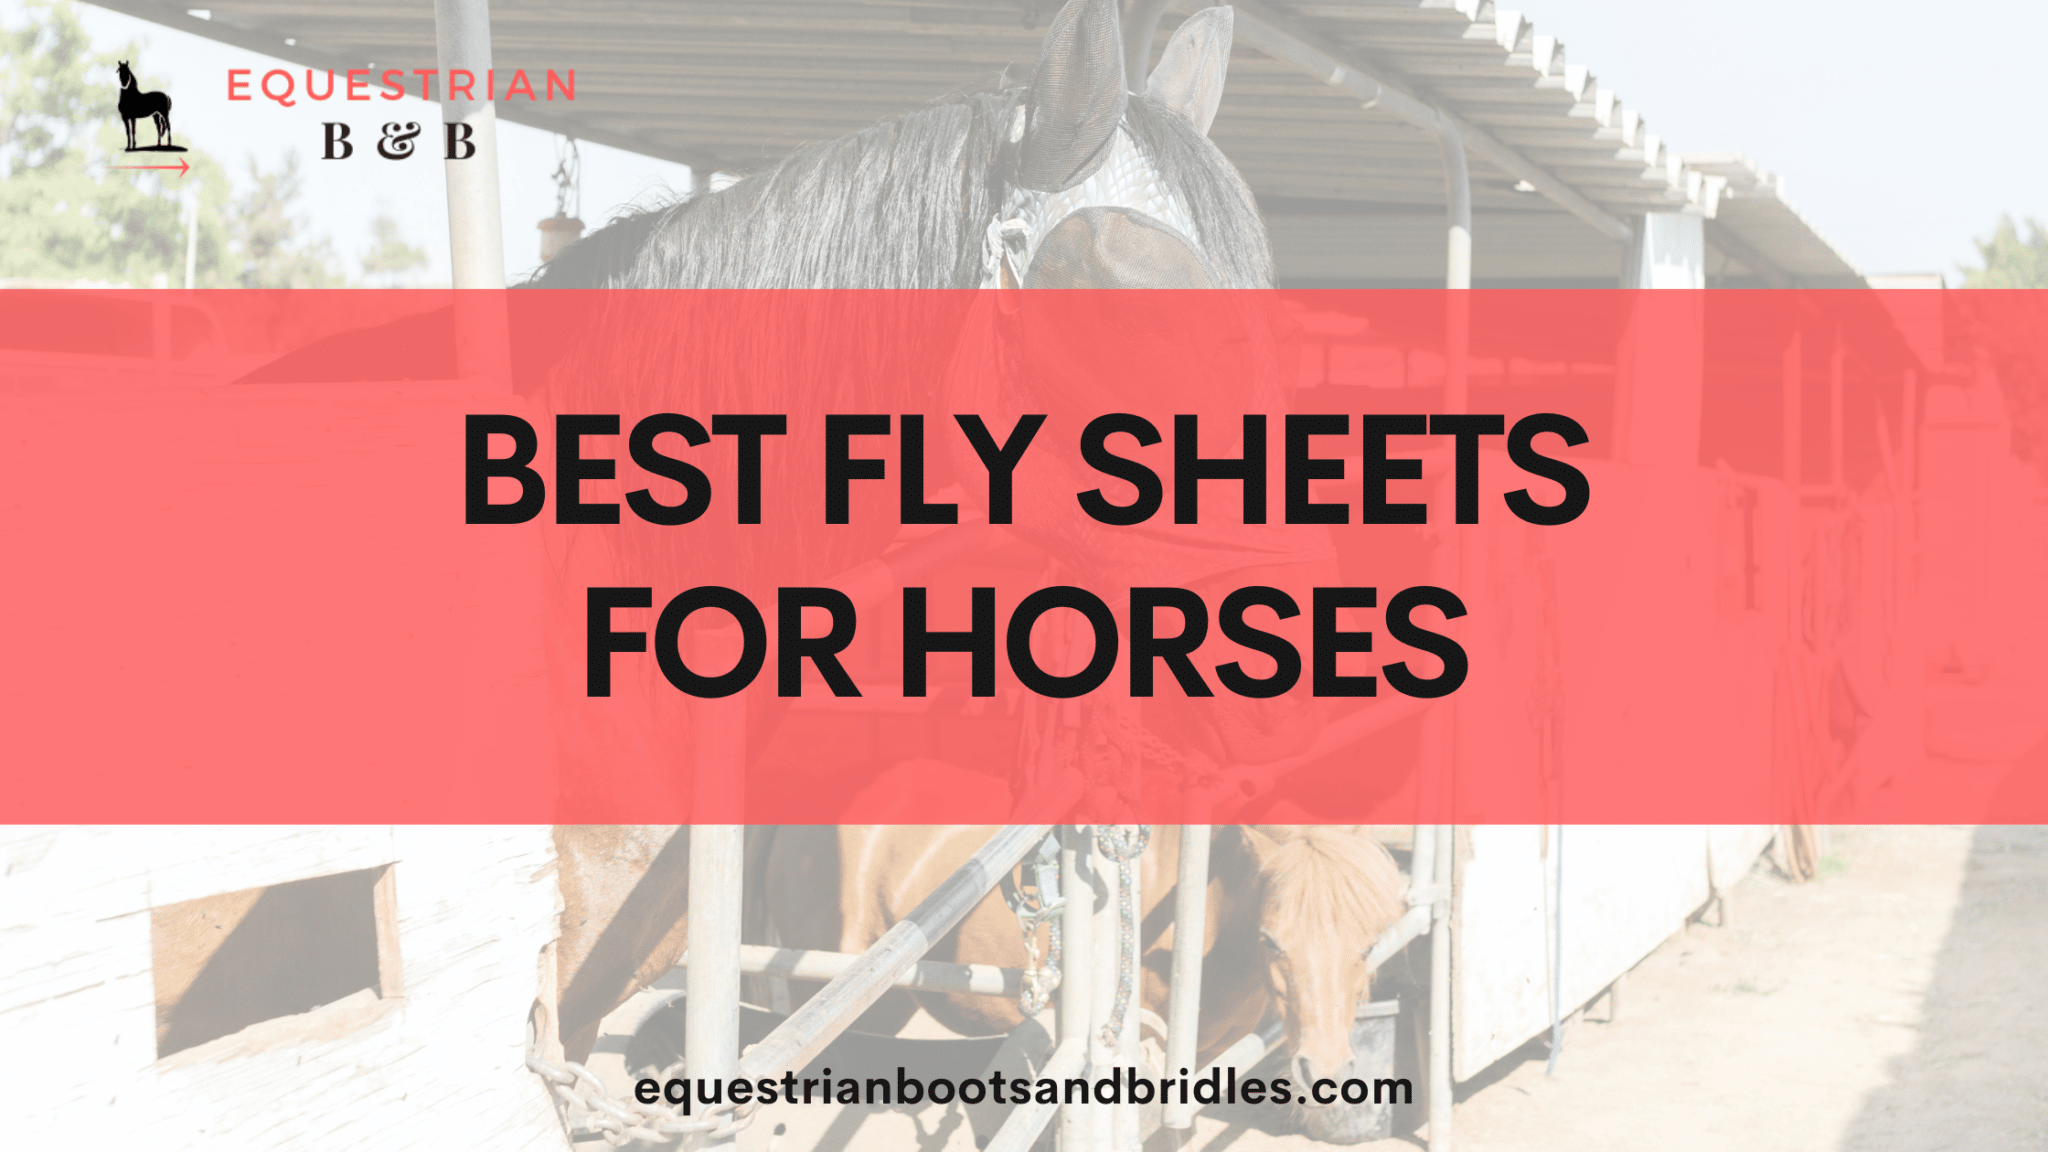 best fly sheets for horses on equestrianbootsandbridles.com